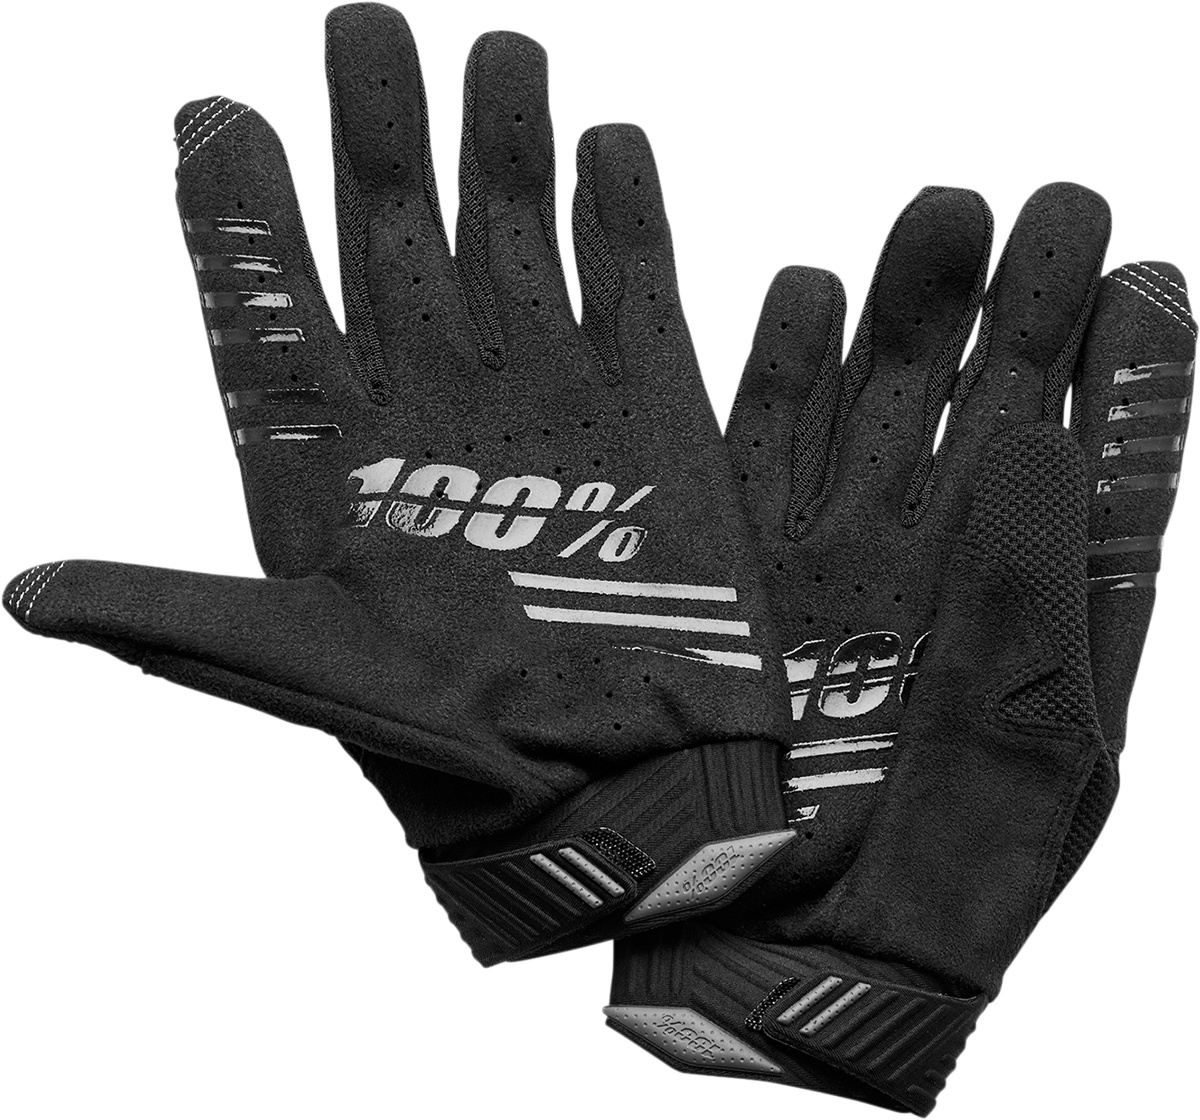 100% R-Core Gloves - Black - Medium 10027-00001